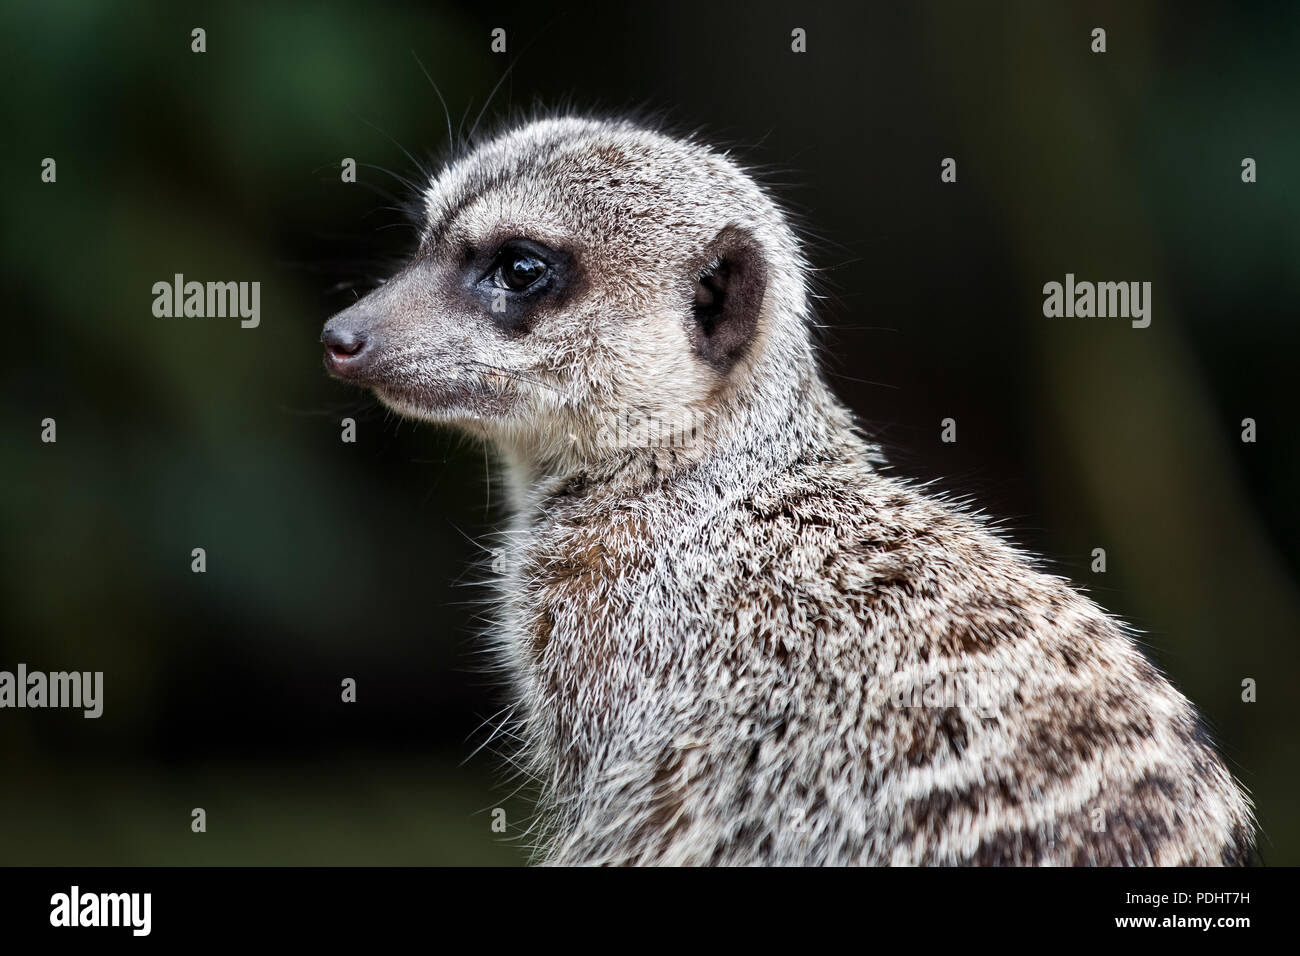 Meerkat animal close up view Stock Photo